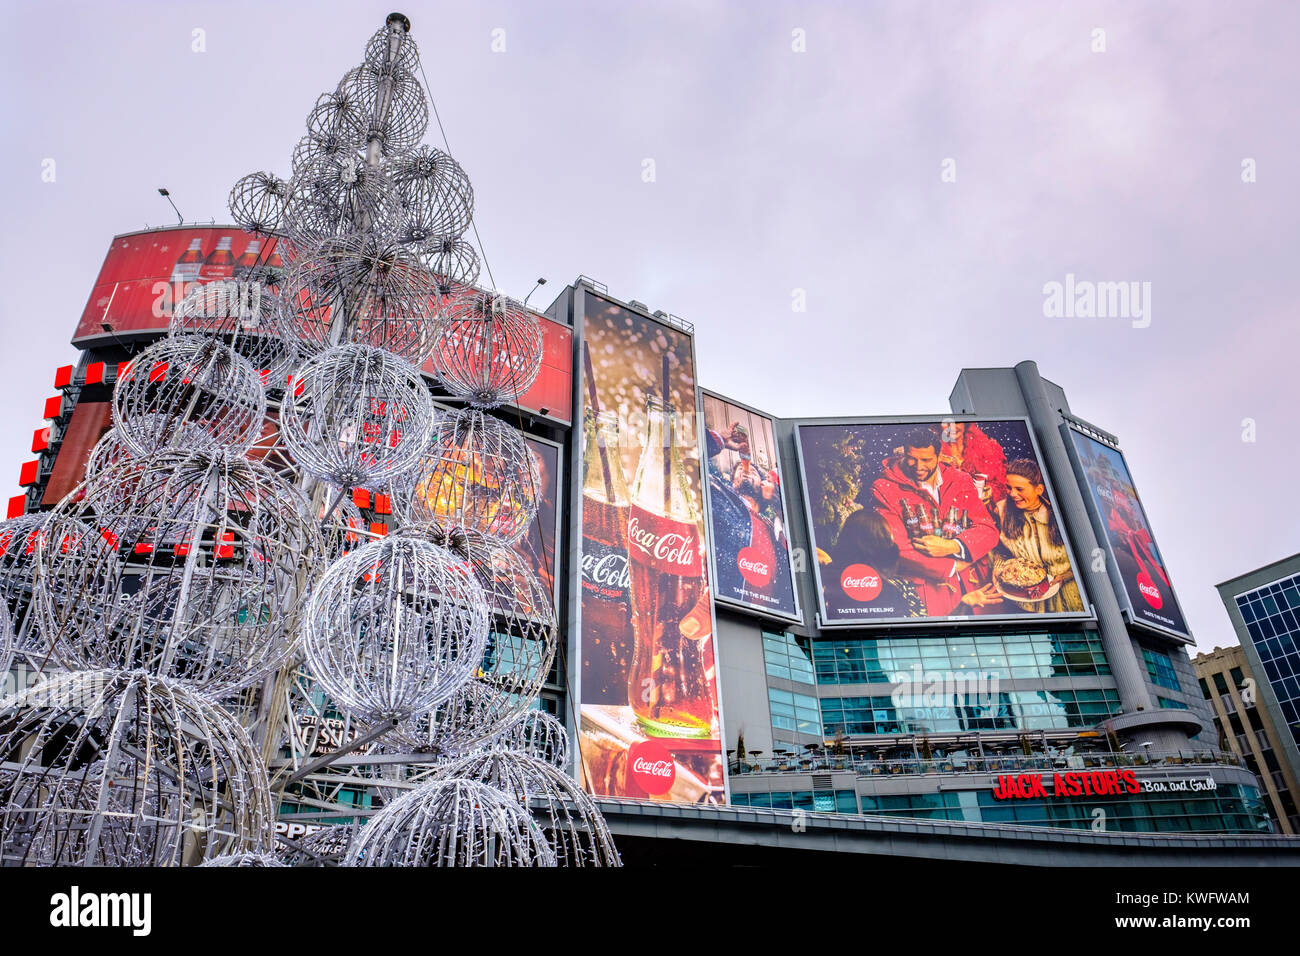 Dundas Square Natale Coca-Cola cartelloni, angolo di Yonge Street e Dundas Street, nel centro di Toronto, Ontario, Canada. Foto Stock